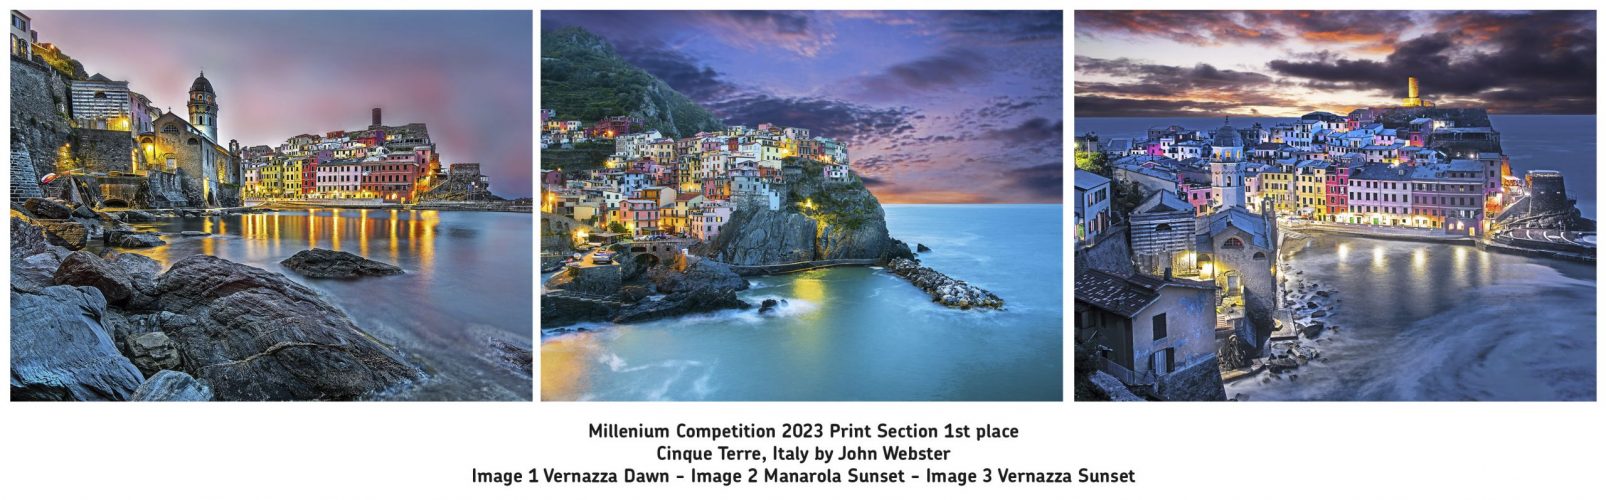 John Webster The Millenium Trophy 1st place Prints -Cinque Terre, Italy